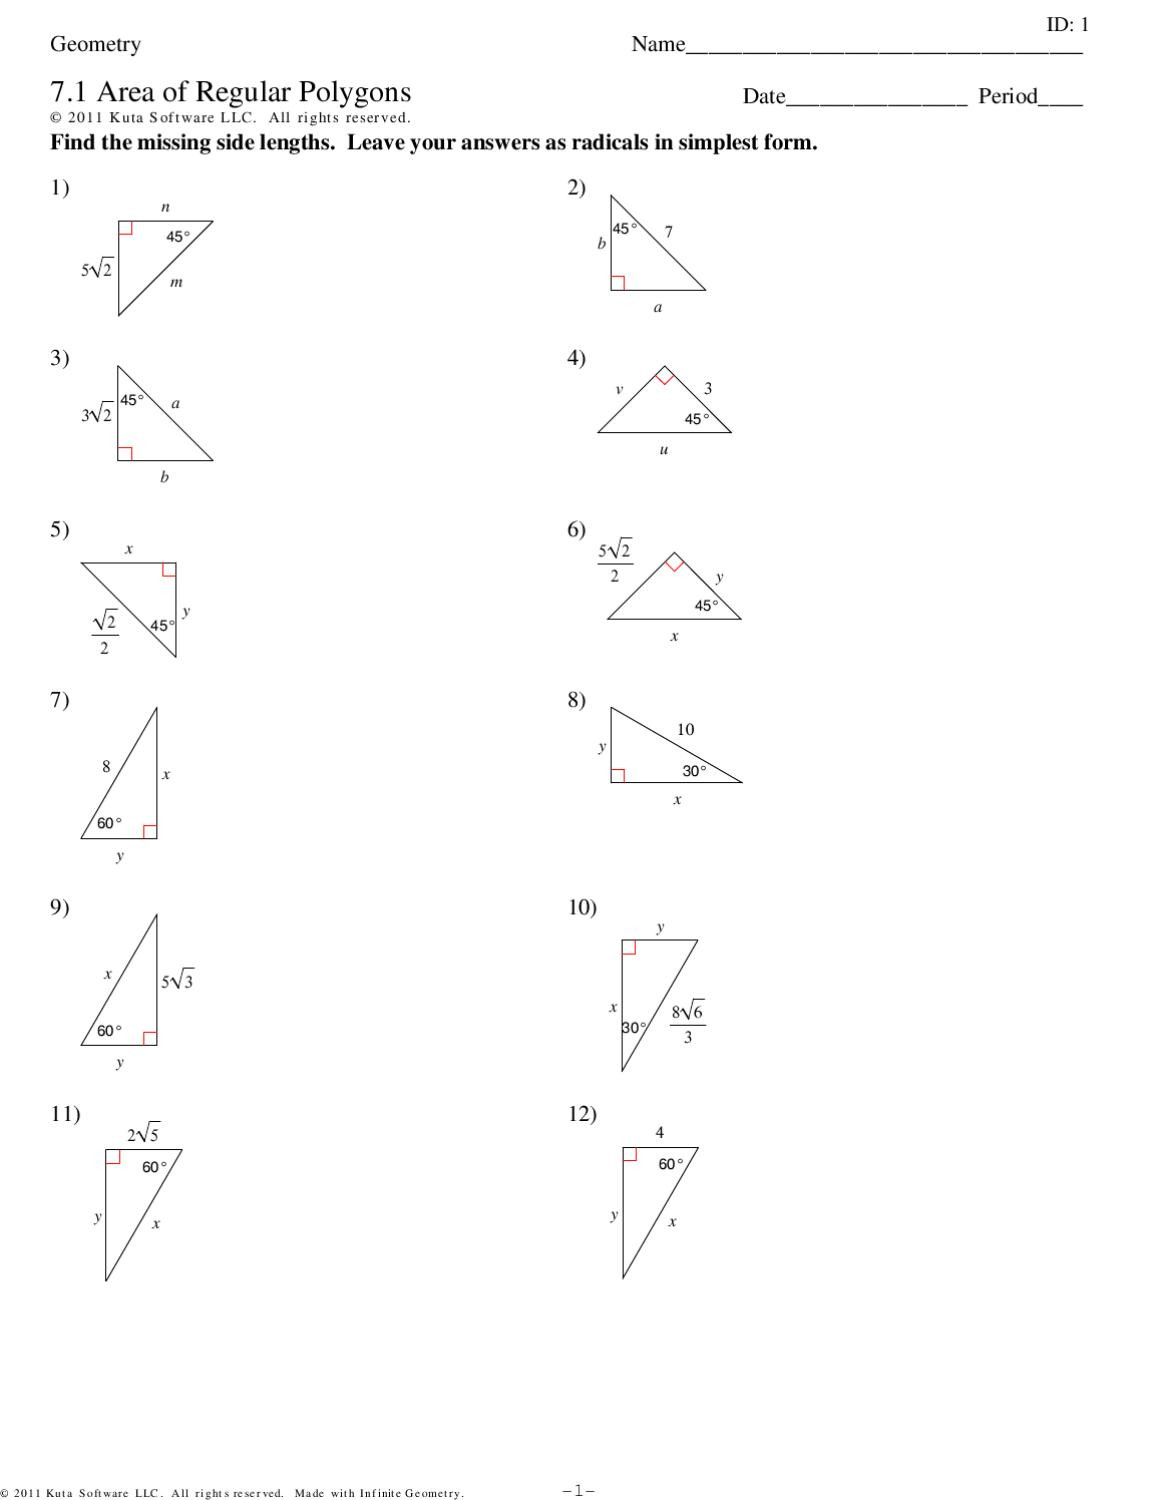 Area Of Regular Polygons Worksheet 7 1 Regular Polygon area by Loftin Gerberding issuu